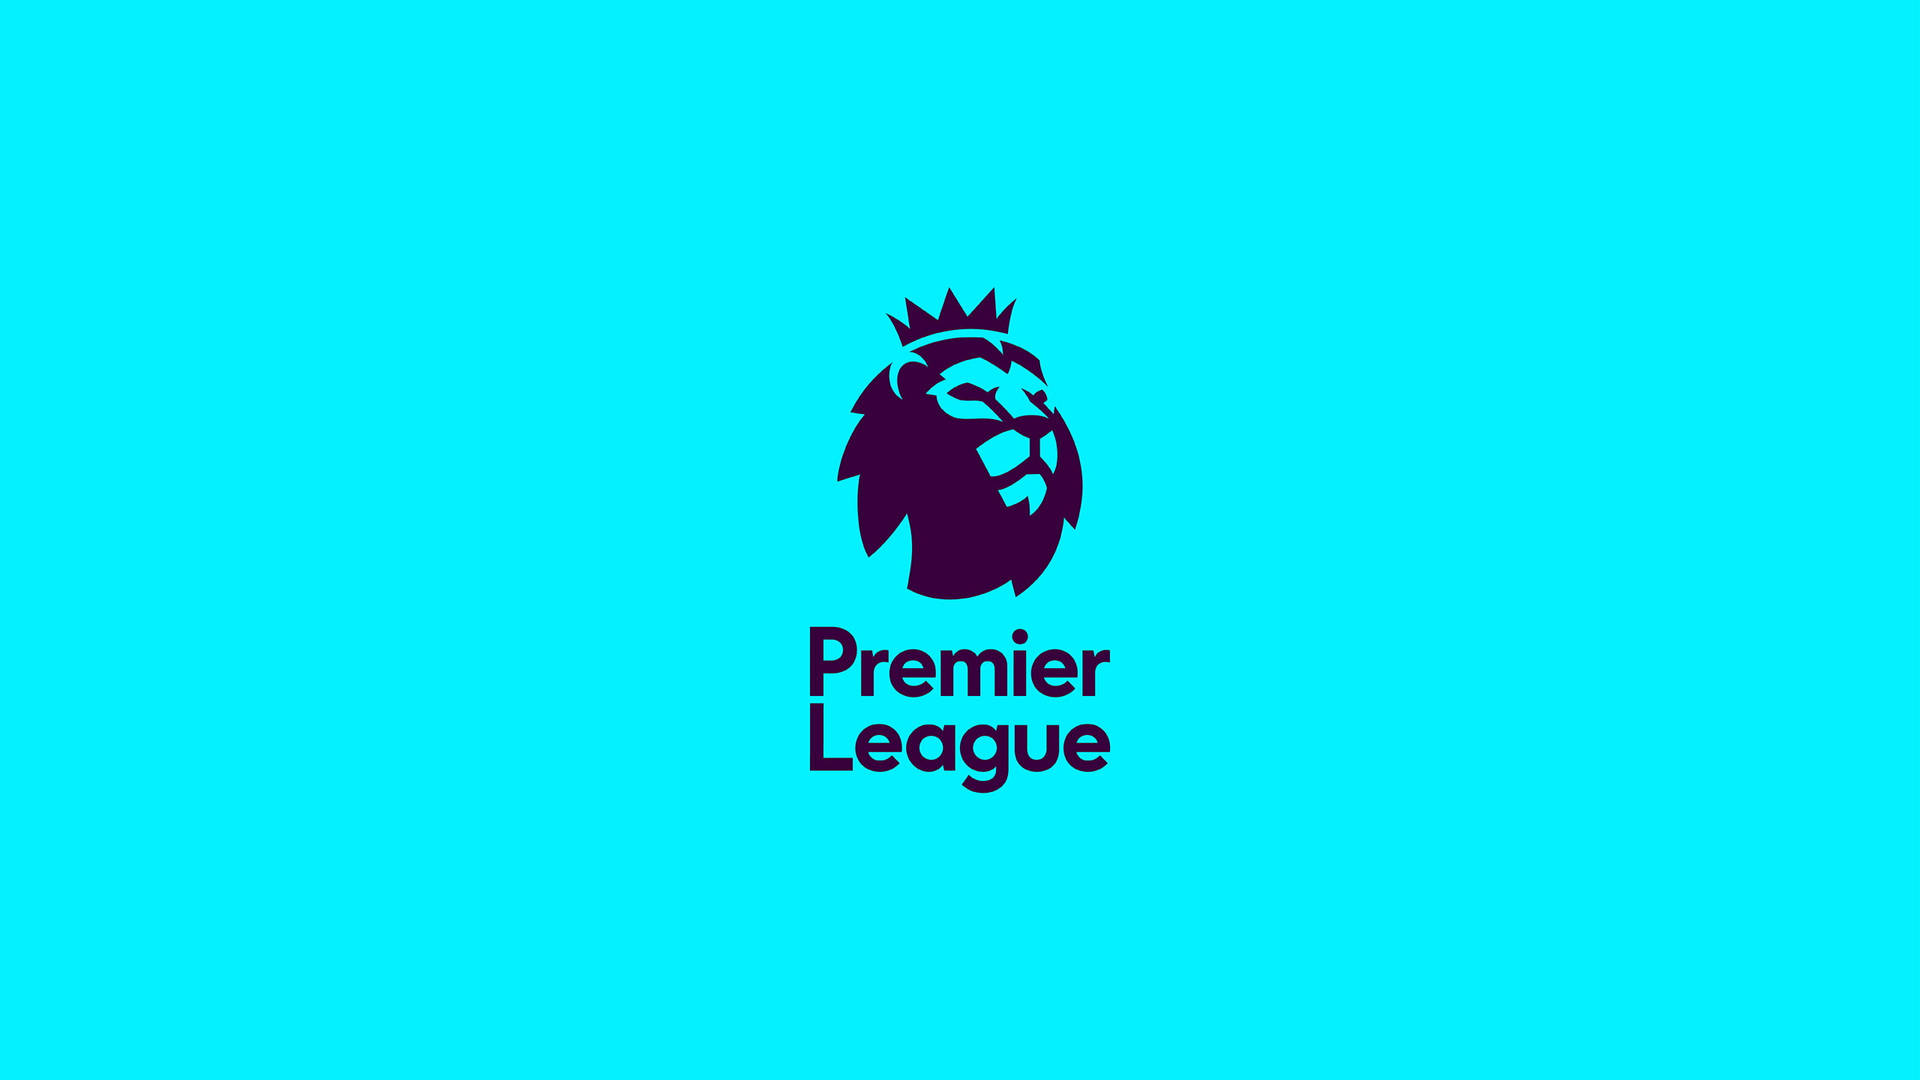 Premier League In Sky Blue Background